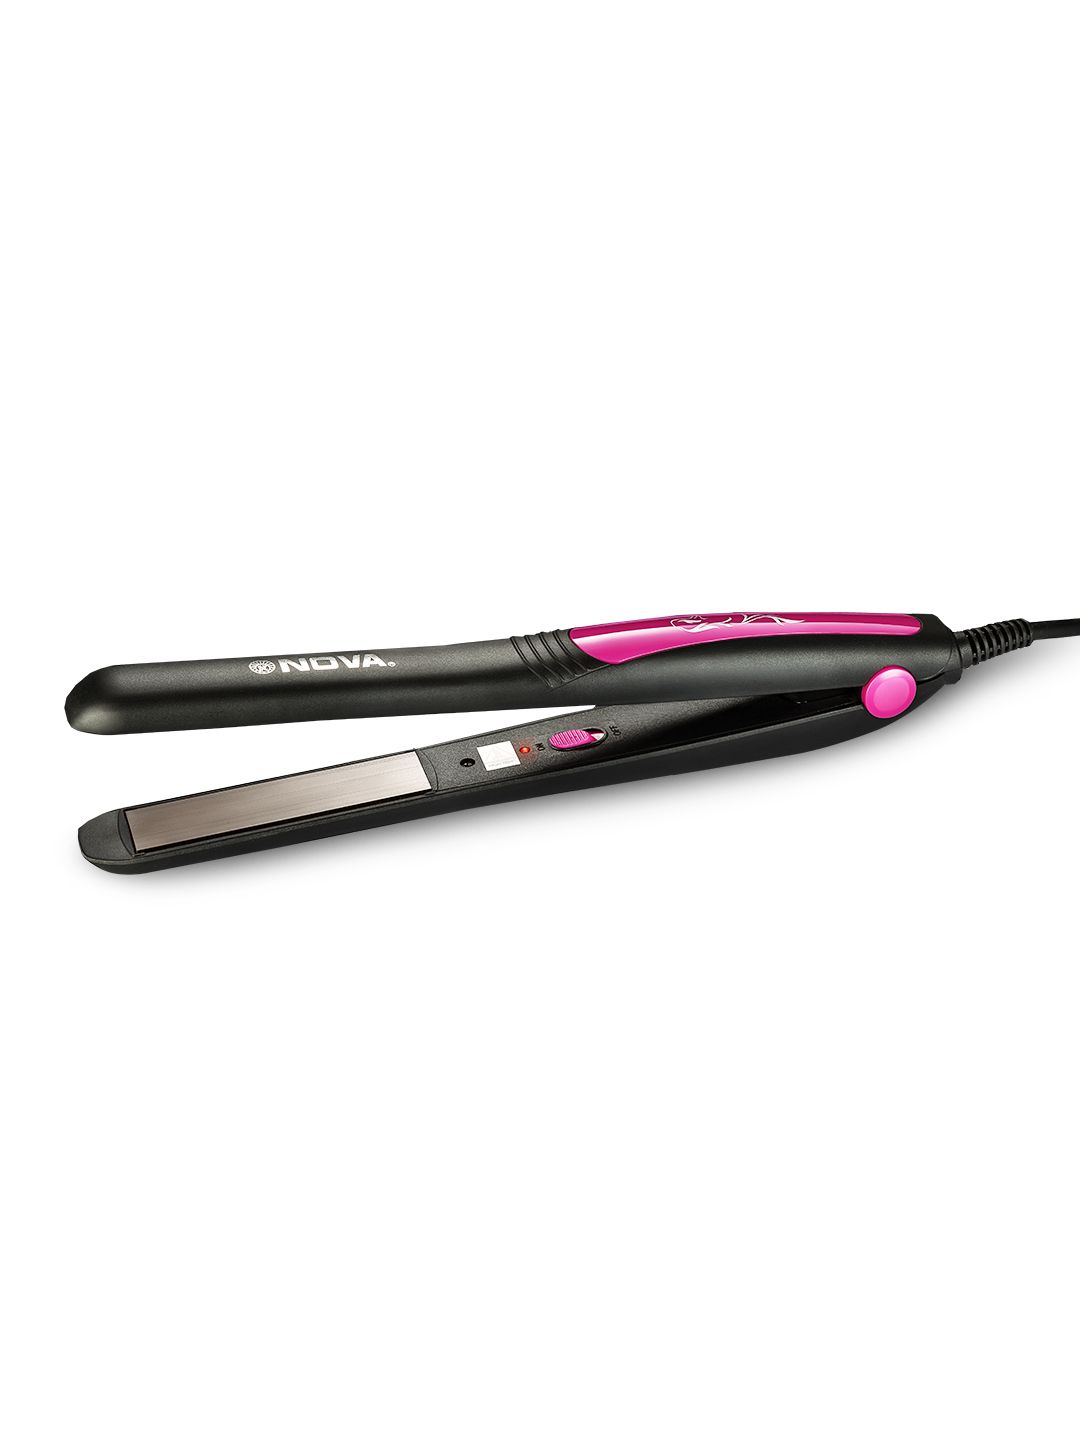 NOVA NHS 840 Pro Shine Hair Straightener - Black & Pink Price in India